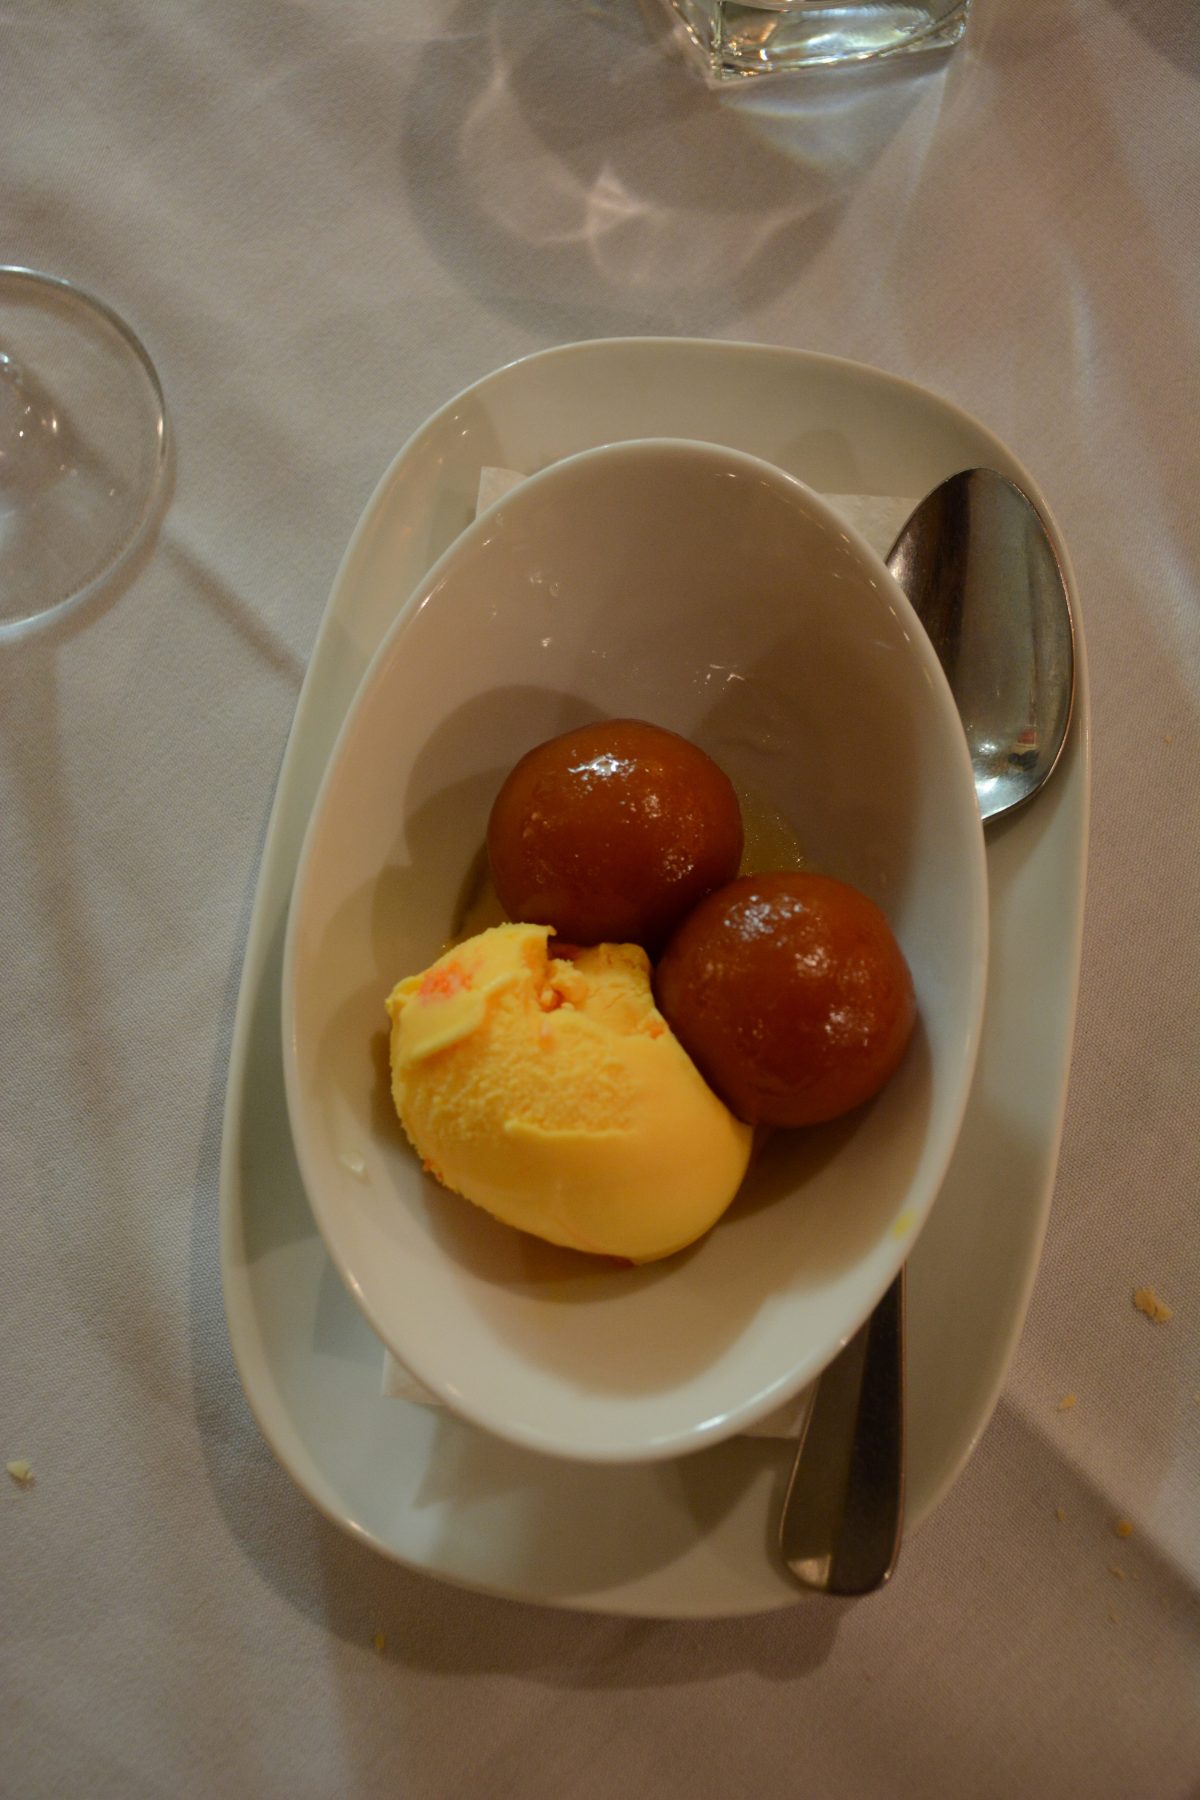 Gulab jamuns (dumplings in golden sugar syrup) with mango ice-cream